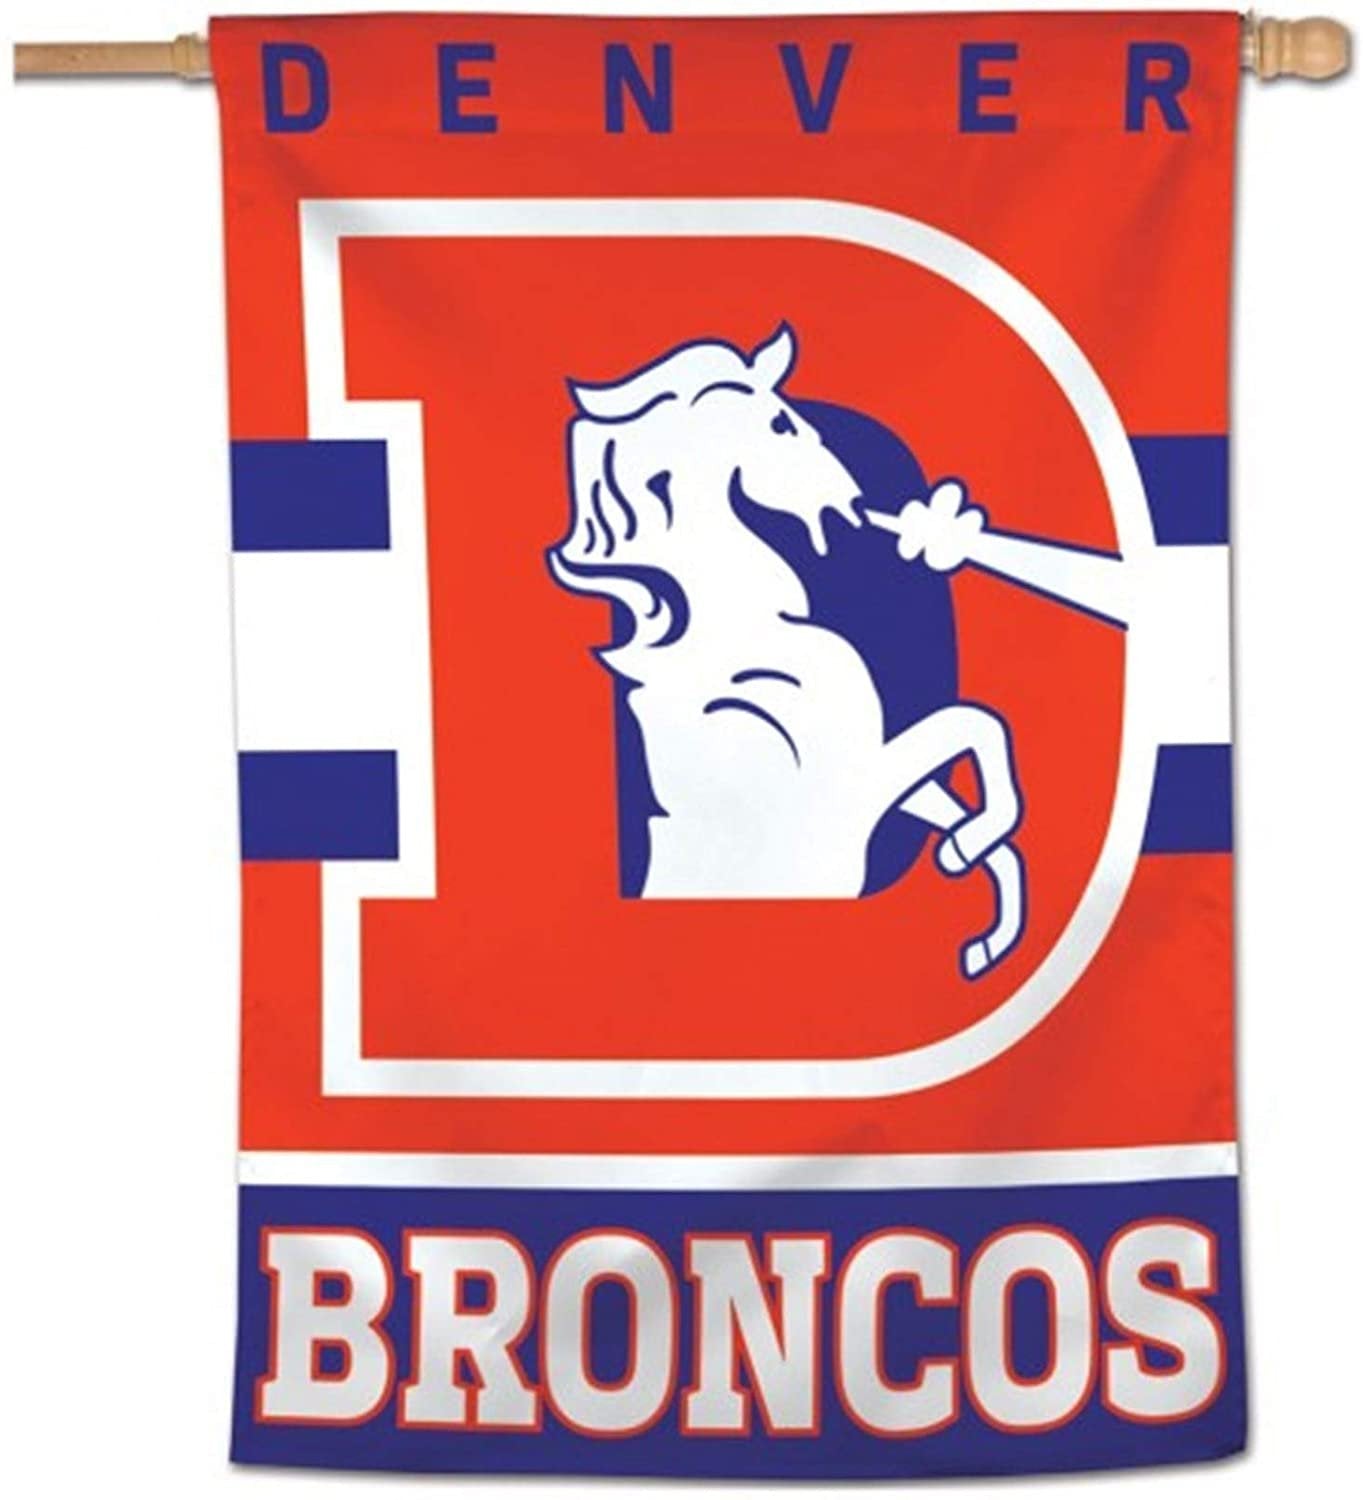 Denver Broncos Premium 28x44 Inch House Flag Banner, Retro Logo, Outdoor Indoor Use